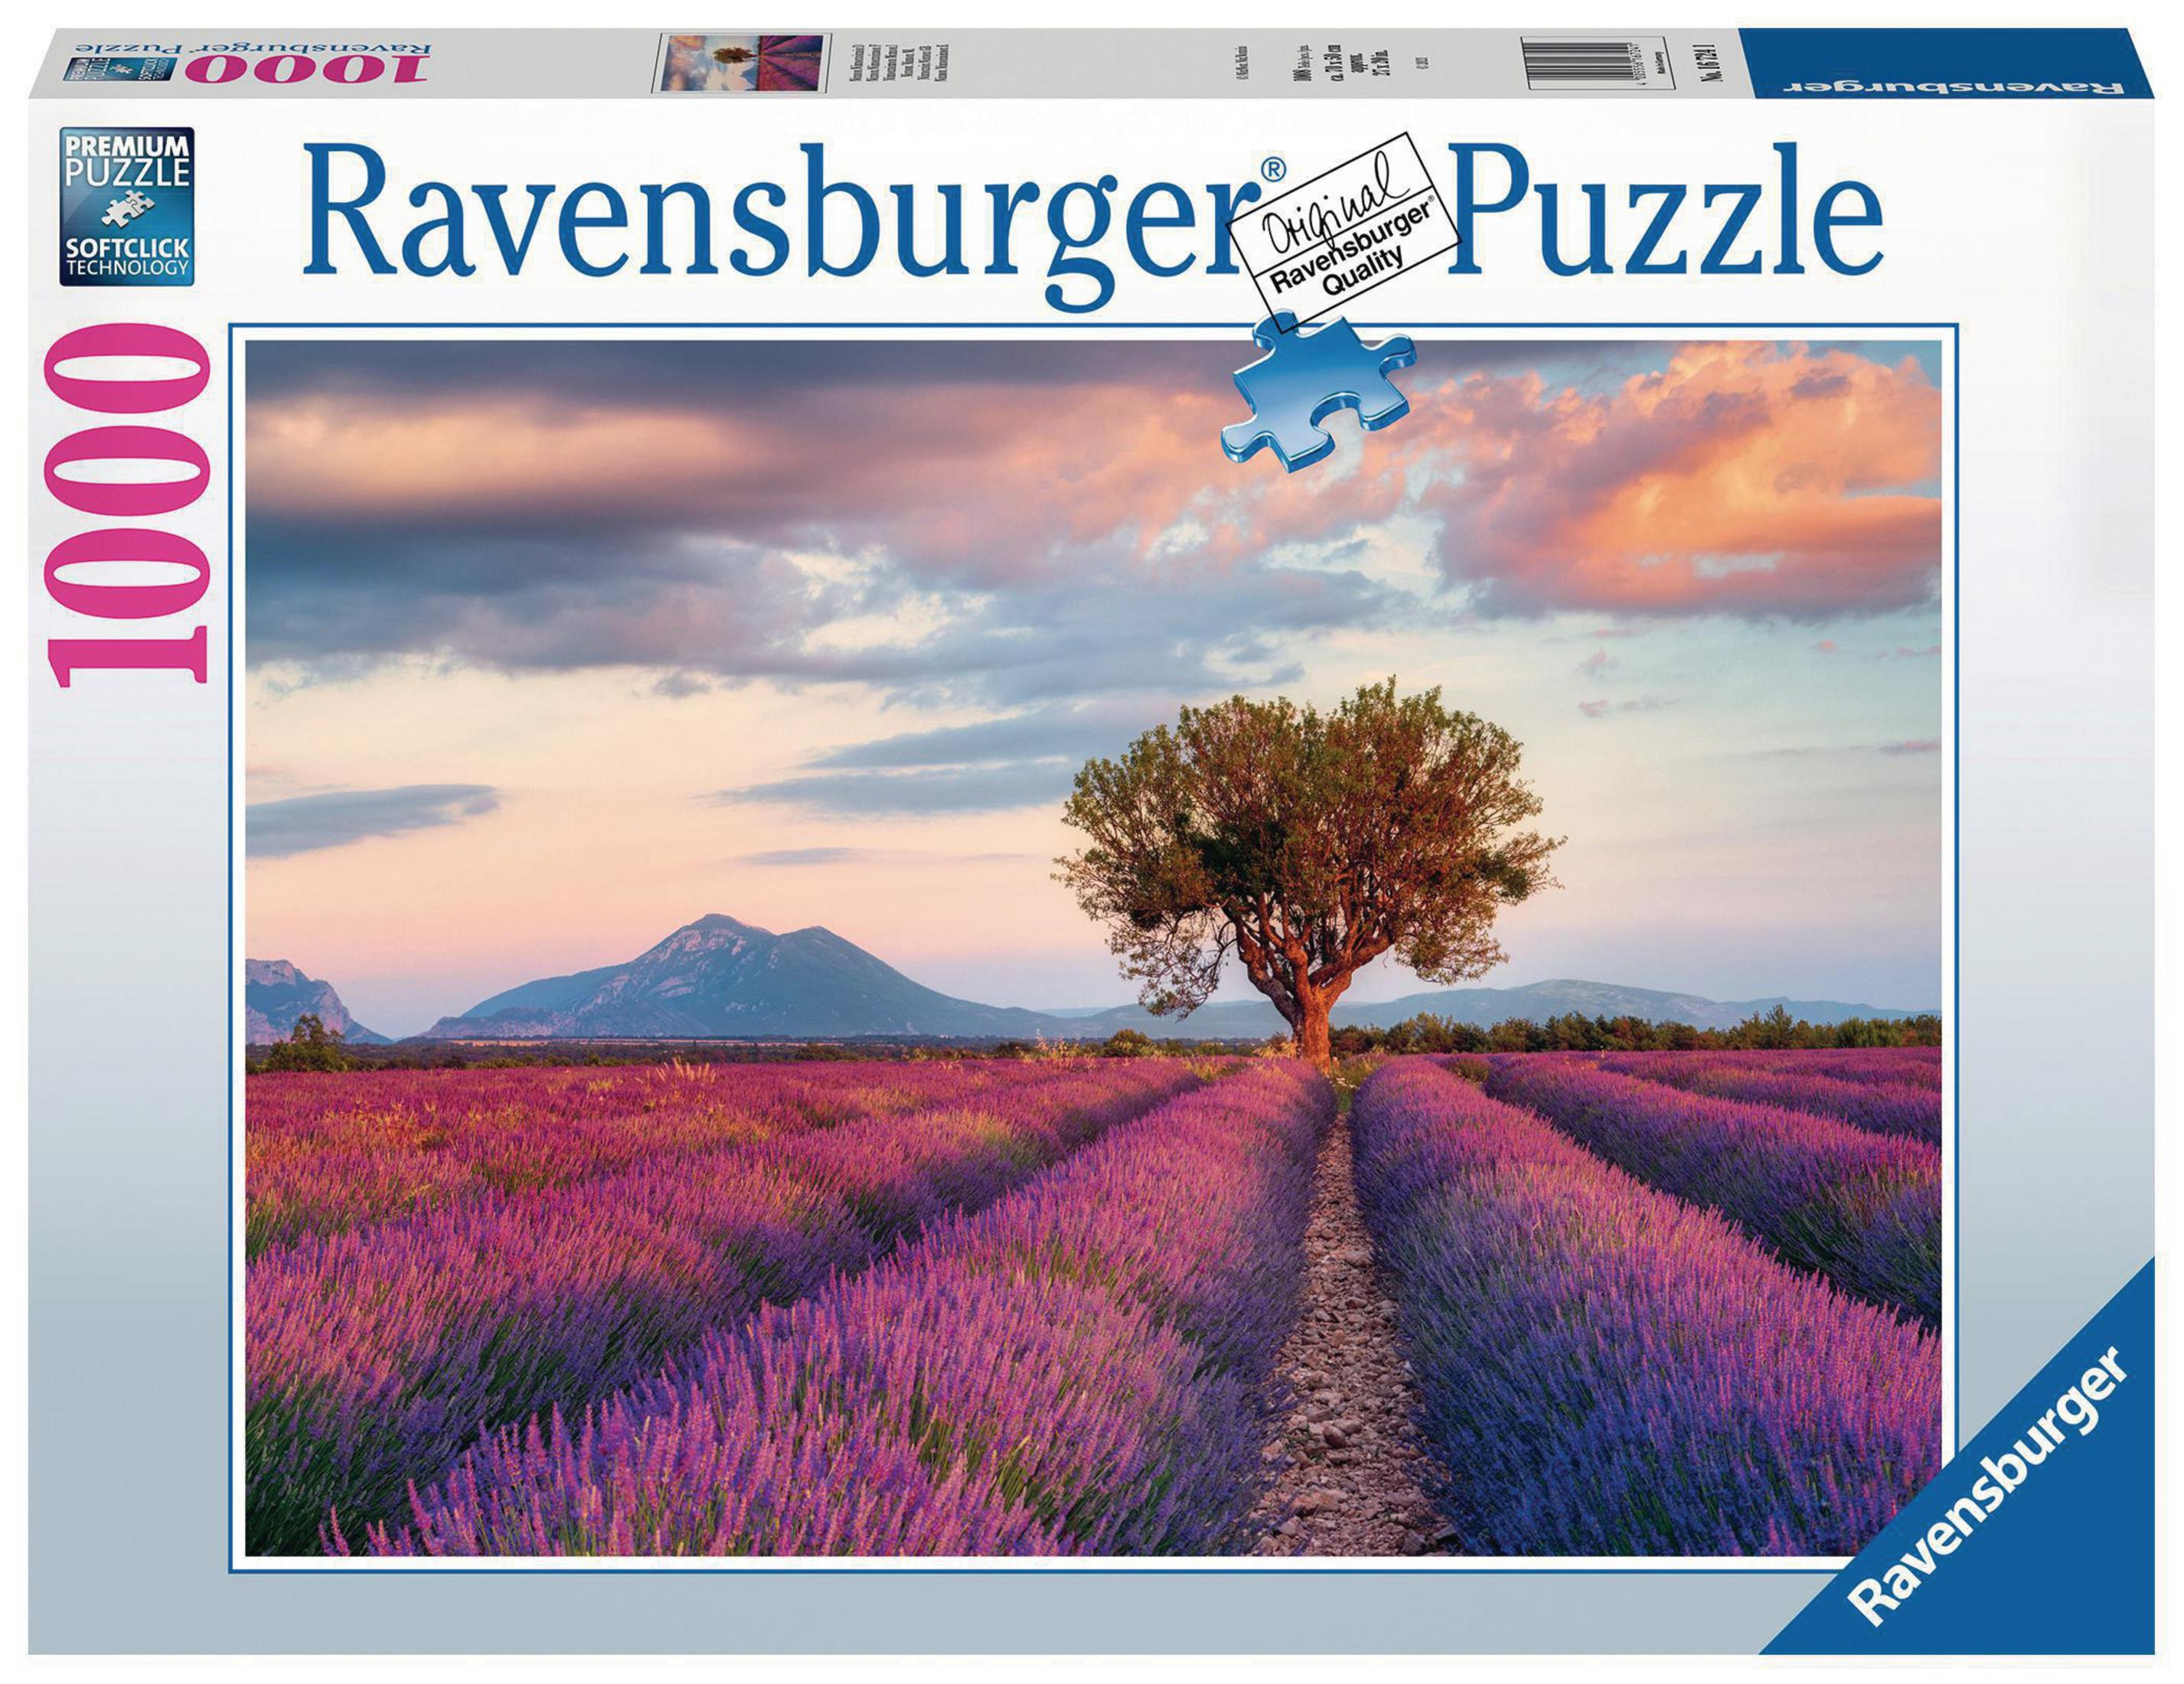 RAVENSBURGER 16724 GOLDENEN Puzzle LAVENDELFELD ST ZUR